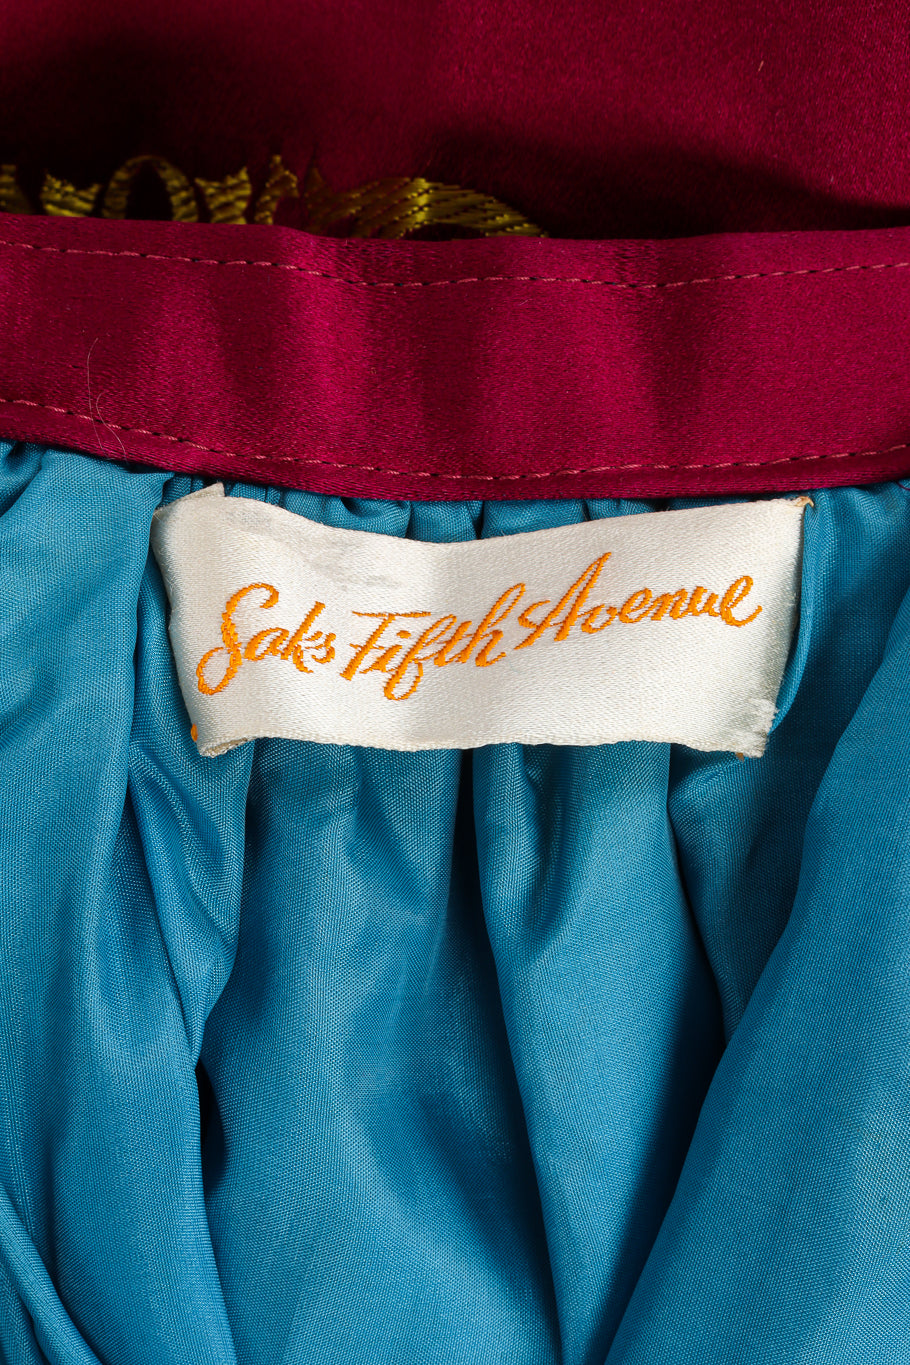 Vintage maxi skirt by Saks Fifth Avenue label close @recessla